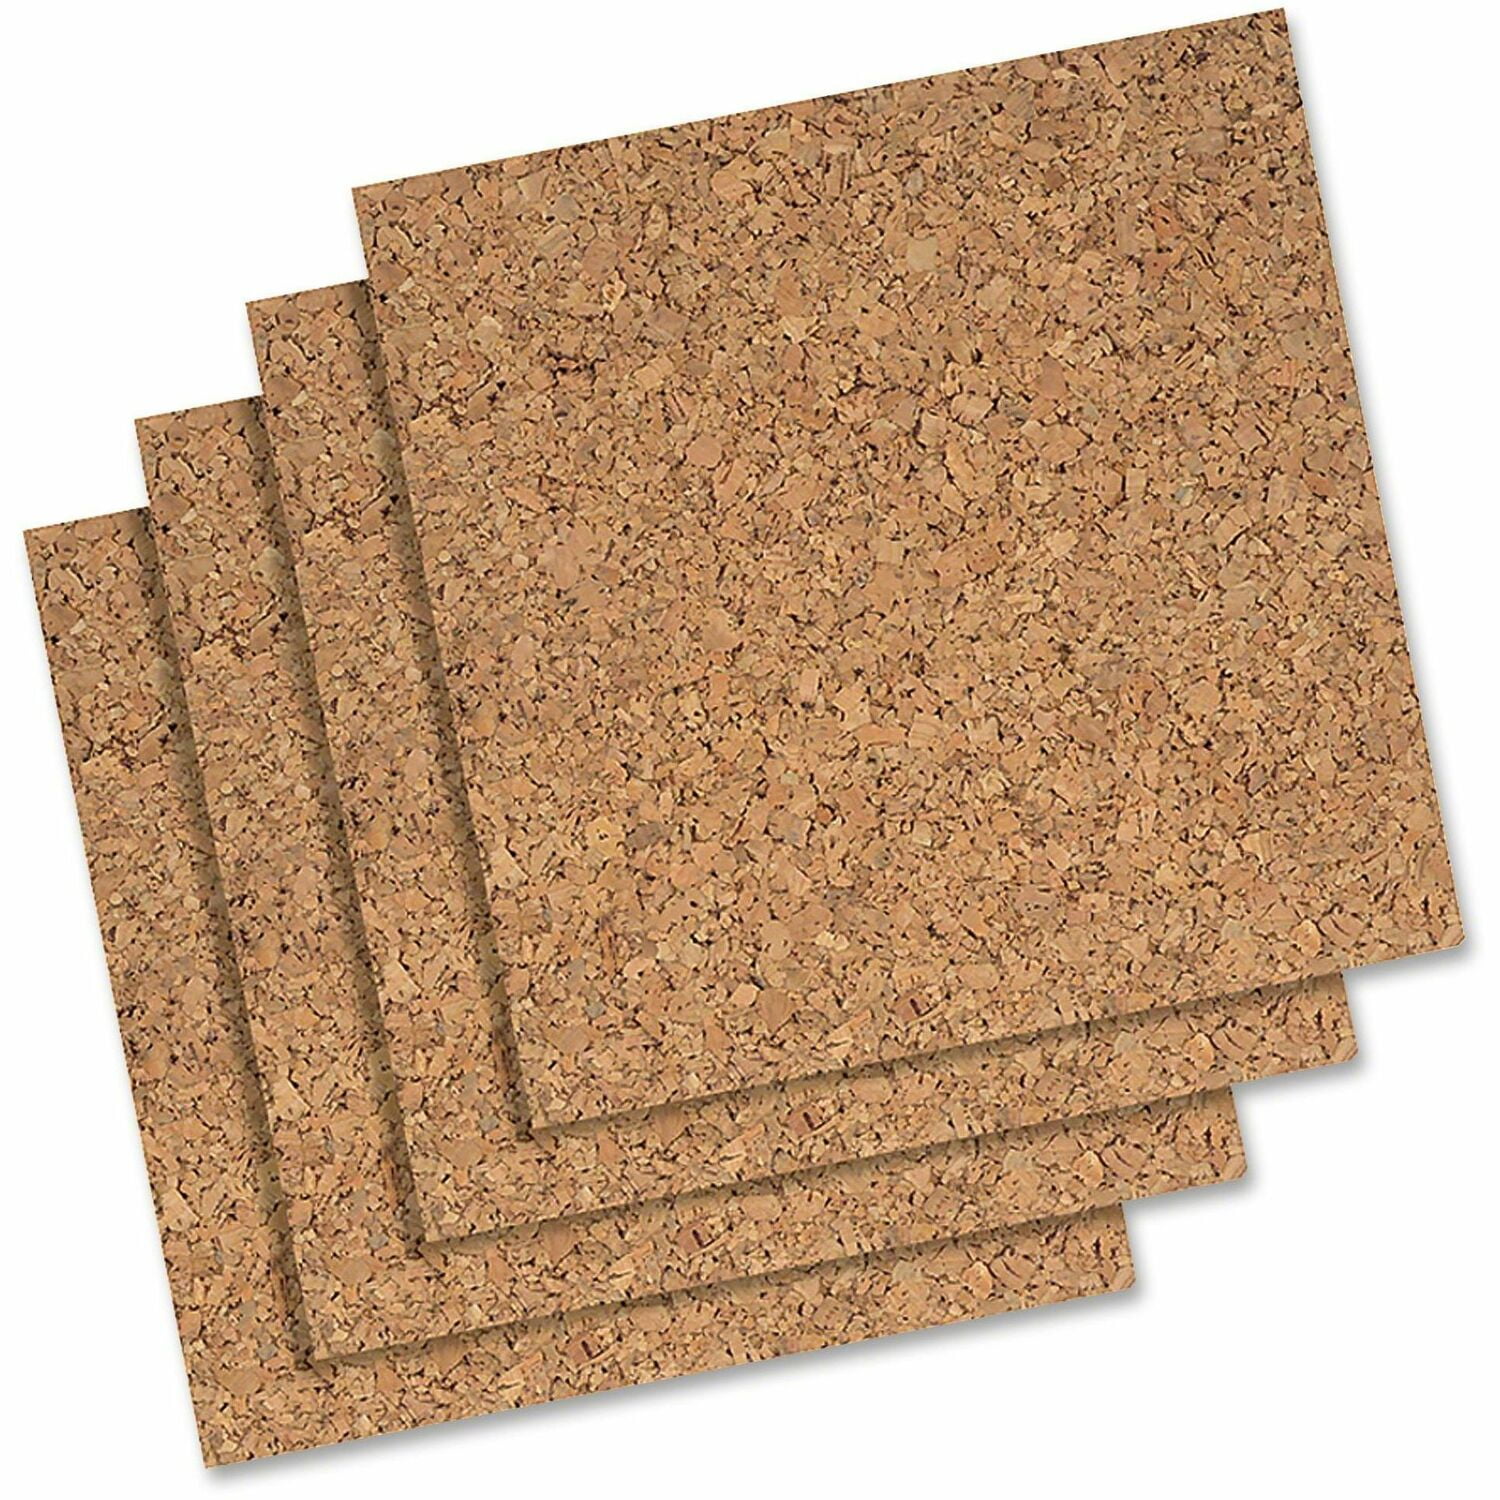 Nature's Mix Cork Flooring Tile - 11.5 x 11.5 - 3/16 Thickness - Random  Mix